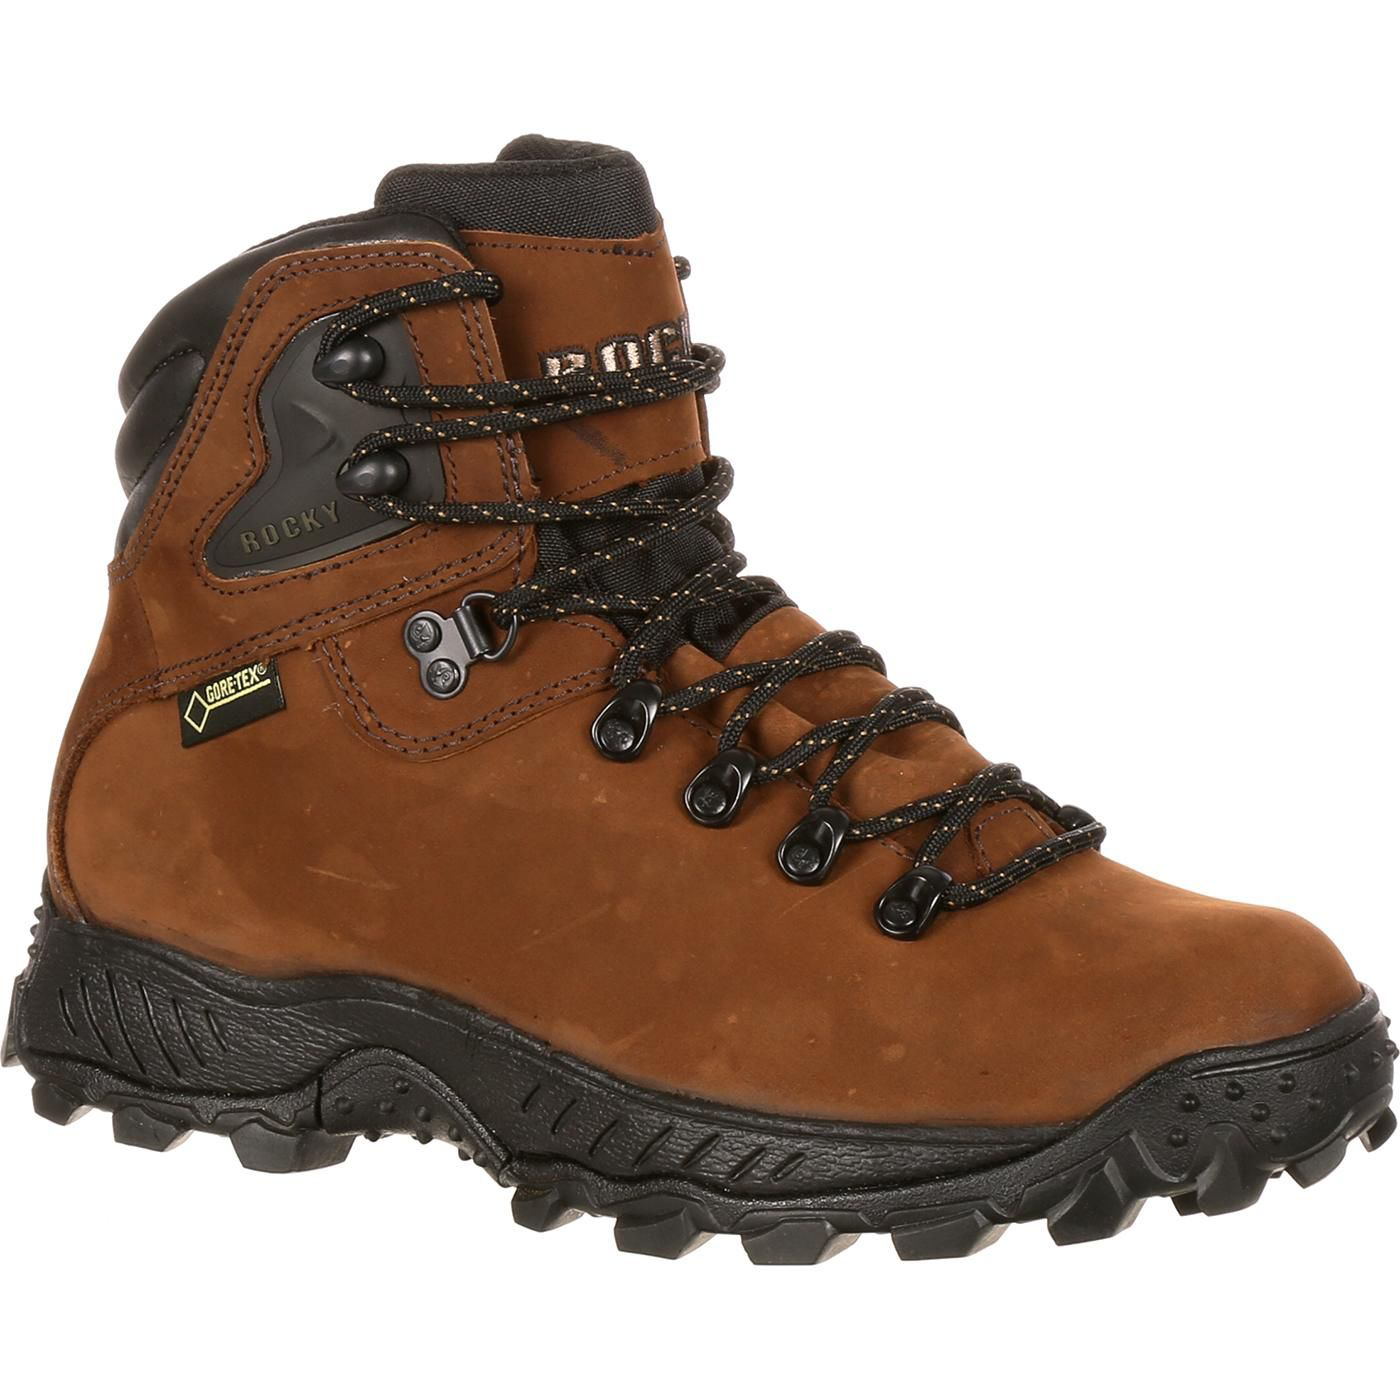 Rocky Ridgetop GORE-TEX 6"" Hiking Boots for Men - Brown - 10M